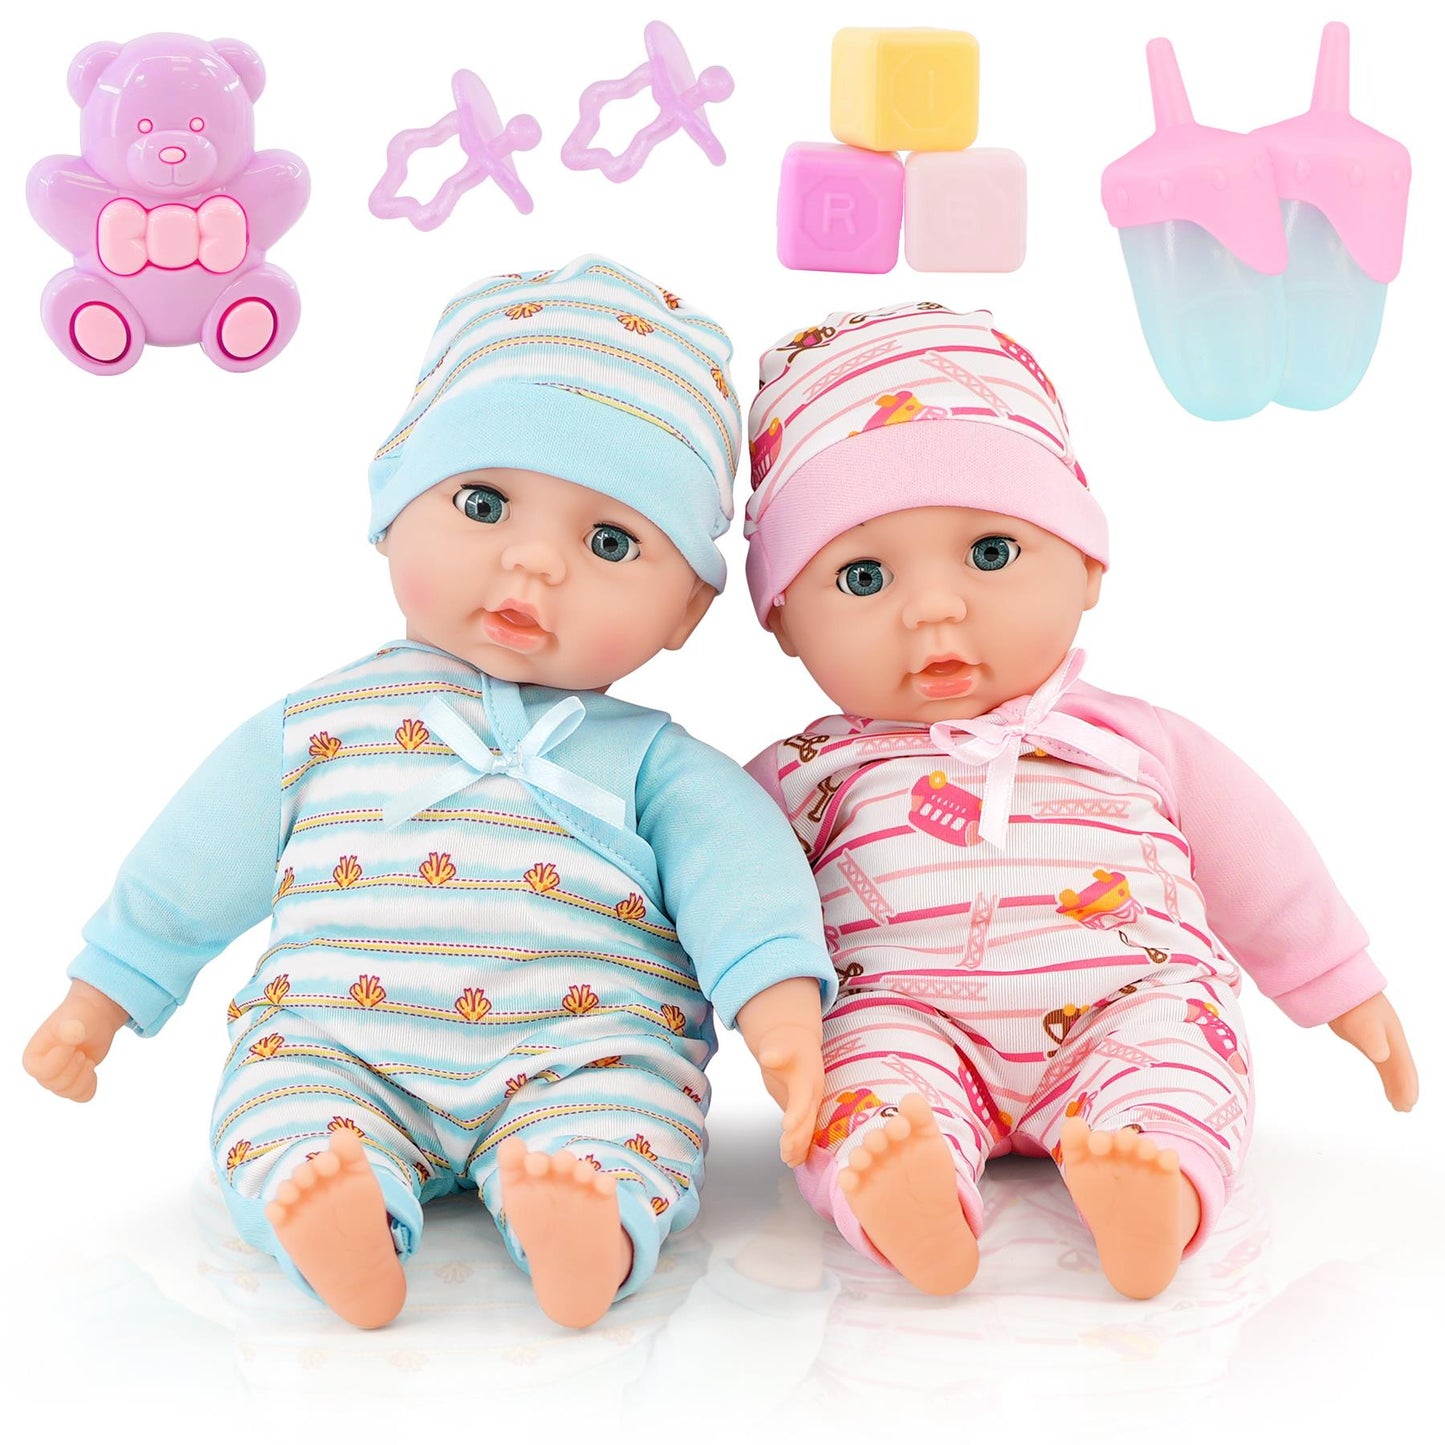 Twins Baby Girl & Boy Dolls by The Magic Toy Shop - UKBuyZone